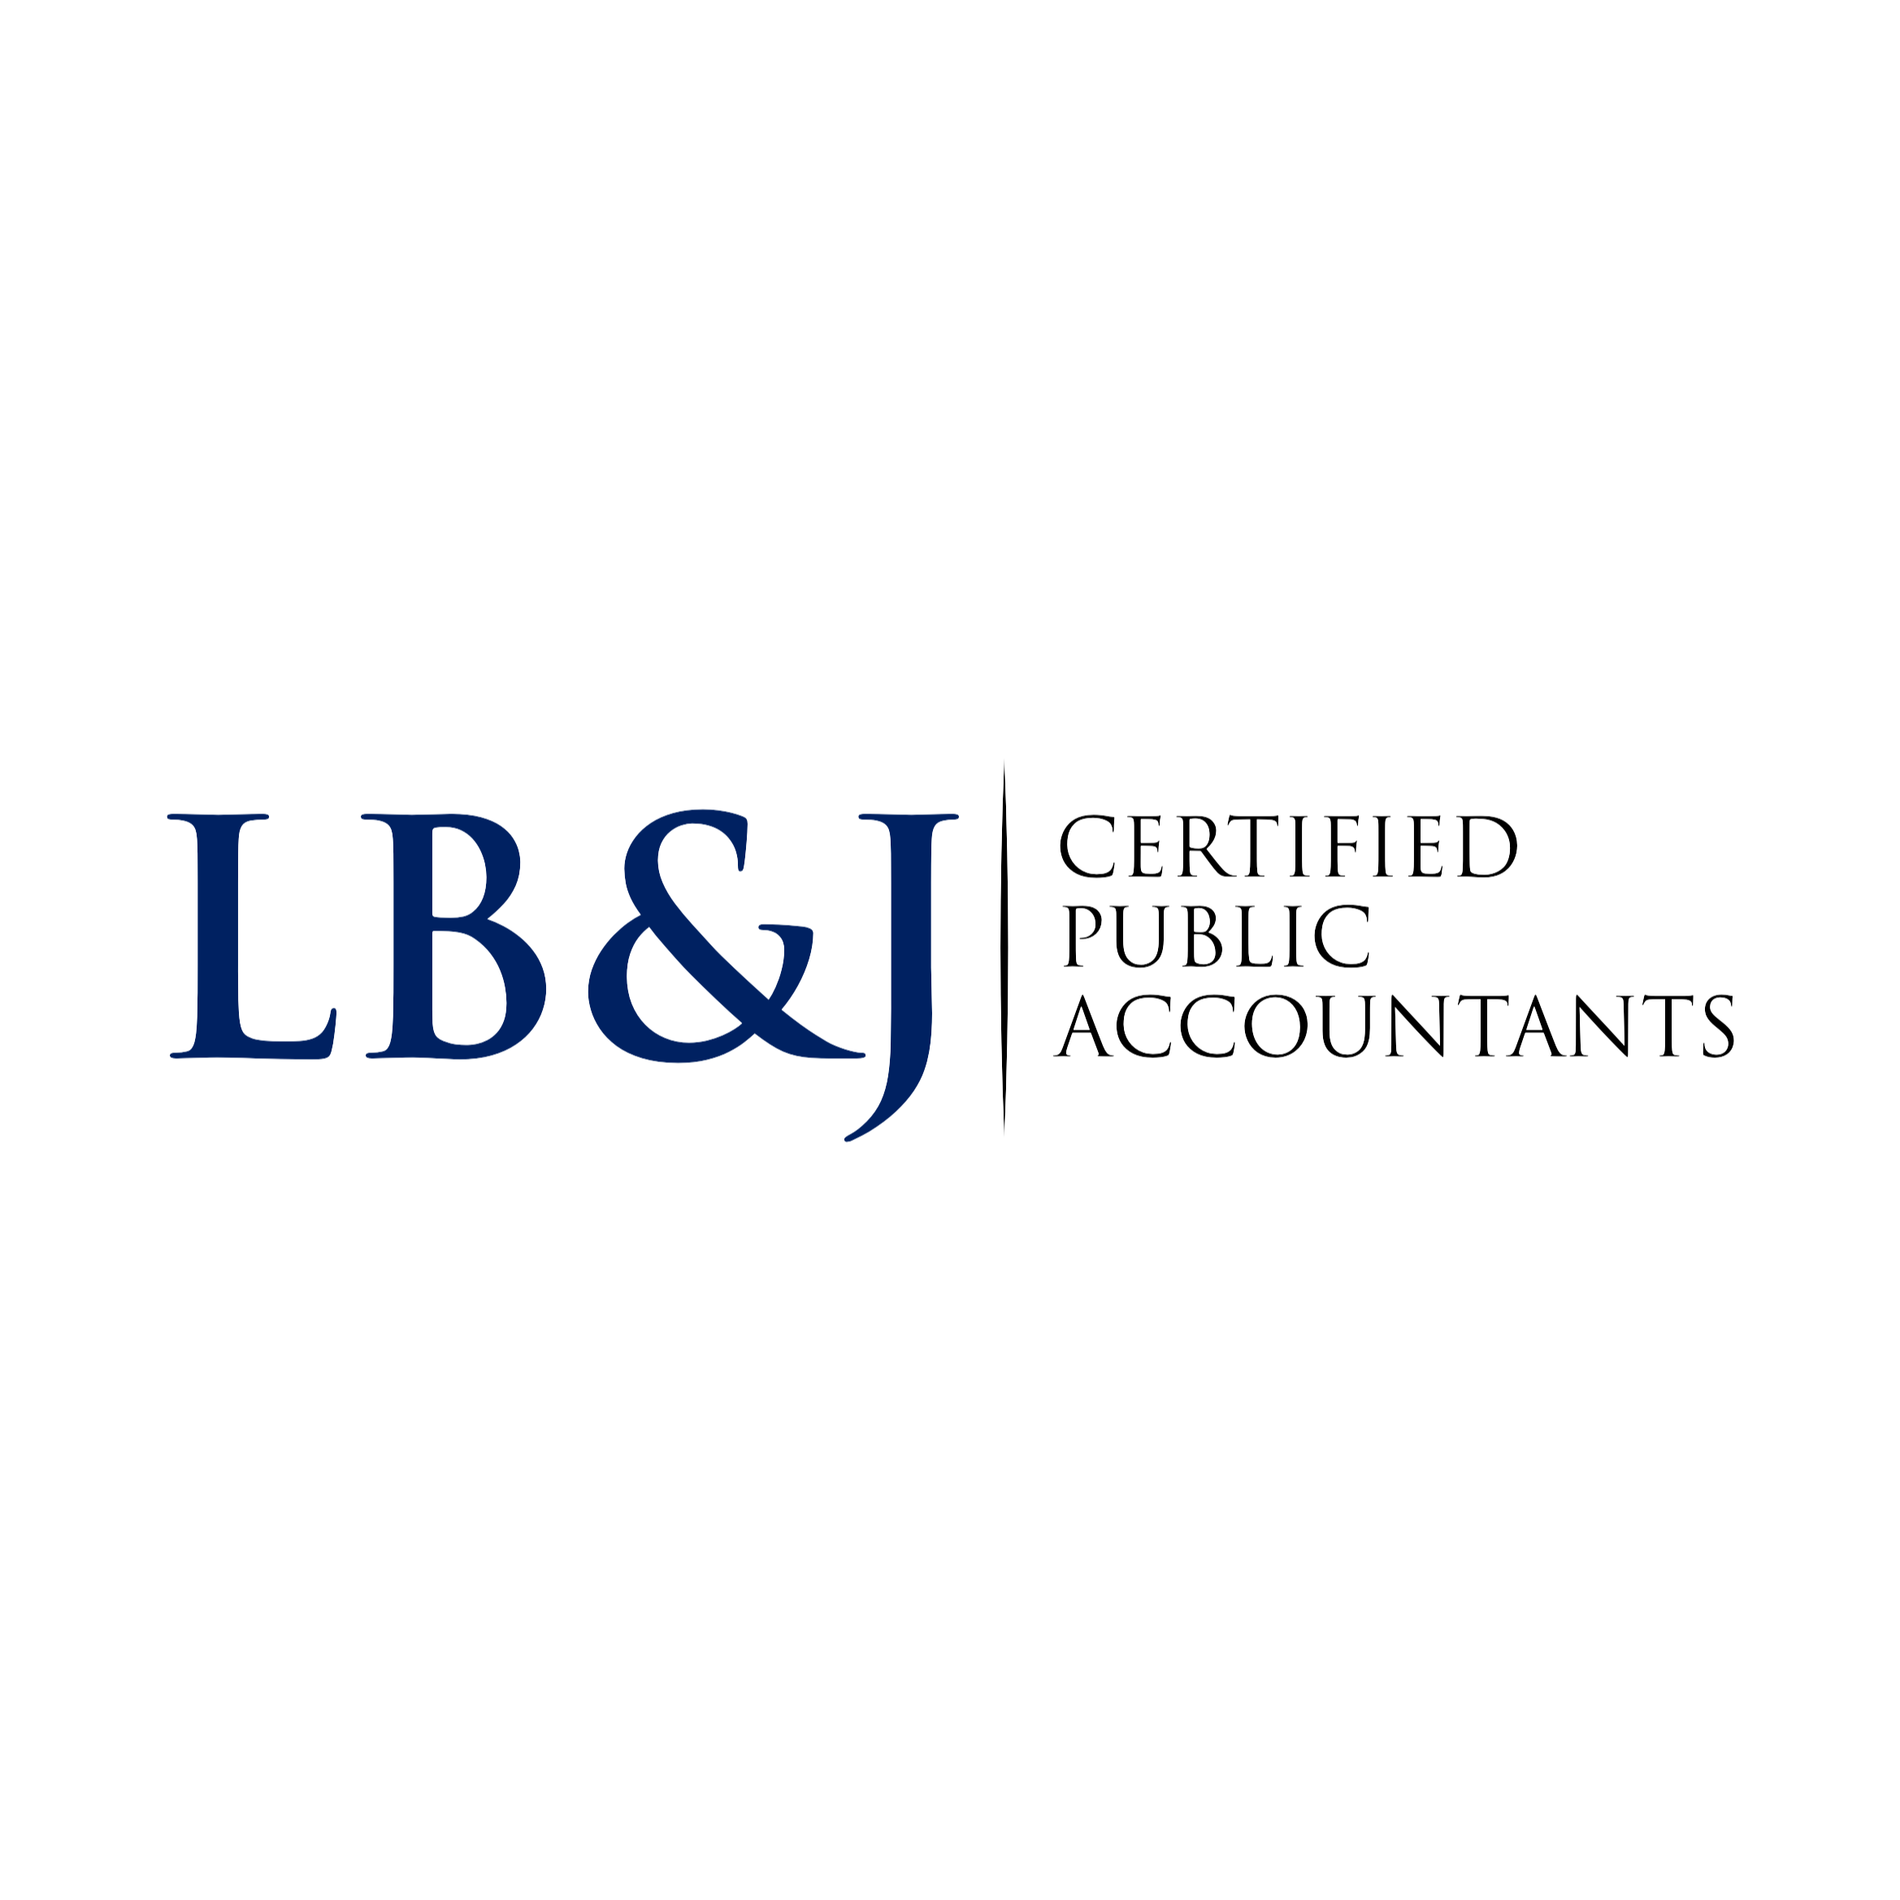 LB&J Certified Public Accountants Logo